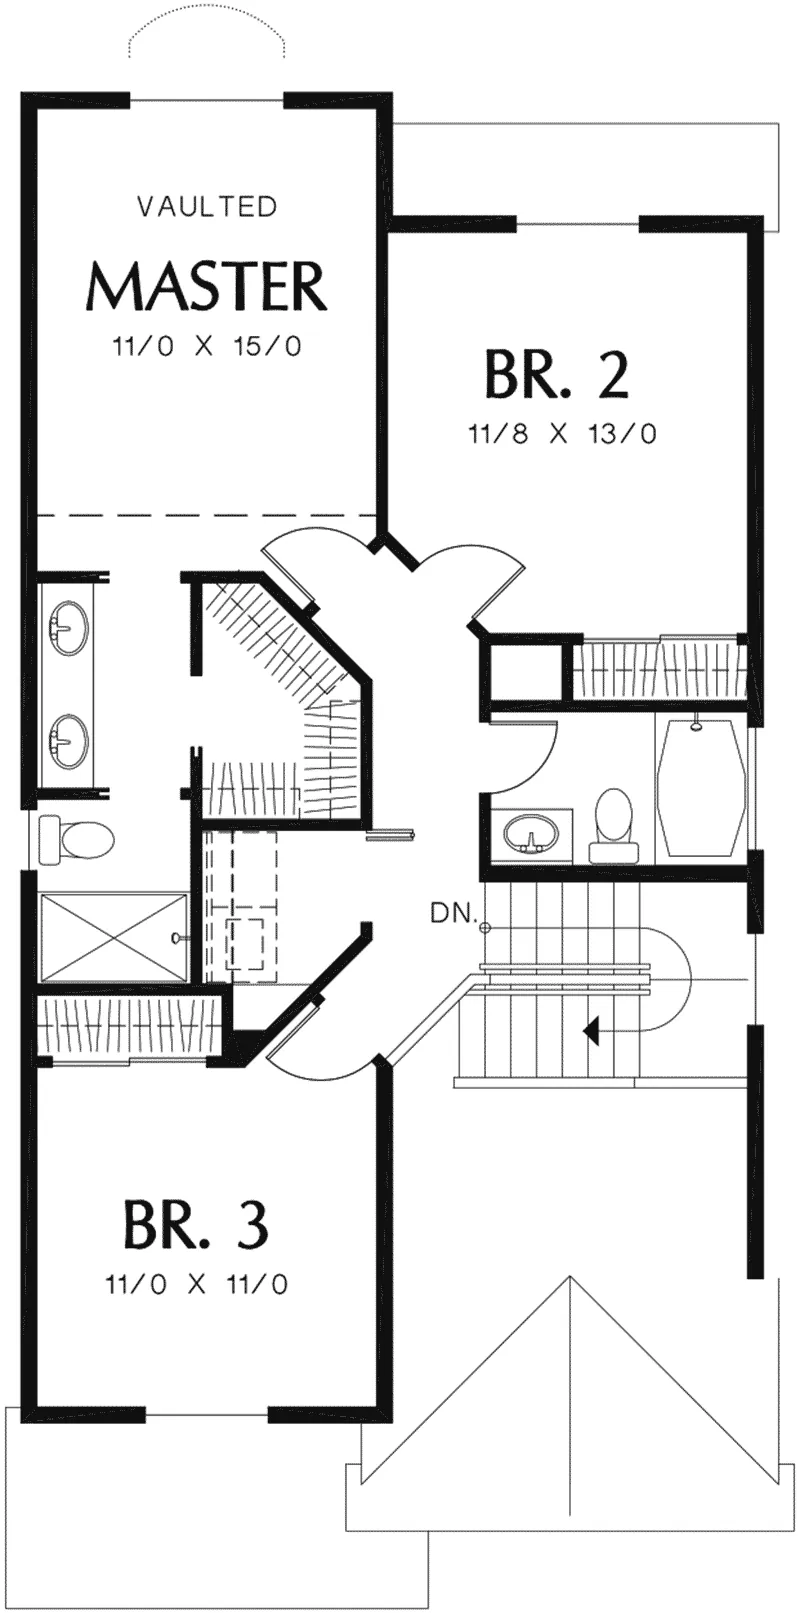 Arts & Crafts House Plan Second Floor - Larkin Lane Craftsman Home 011D-0367 - Shop House Plans and More